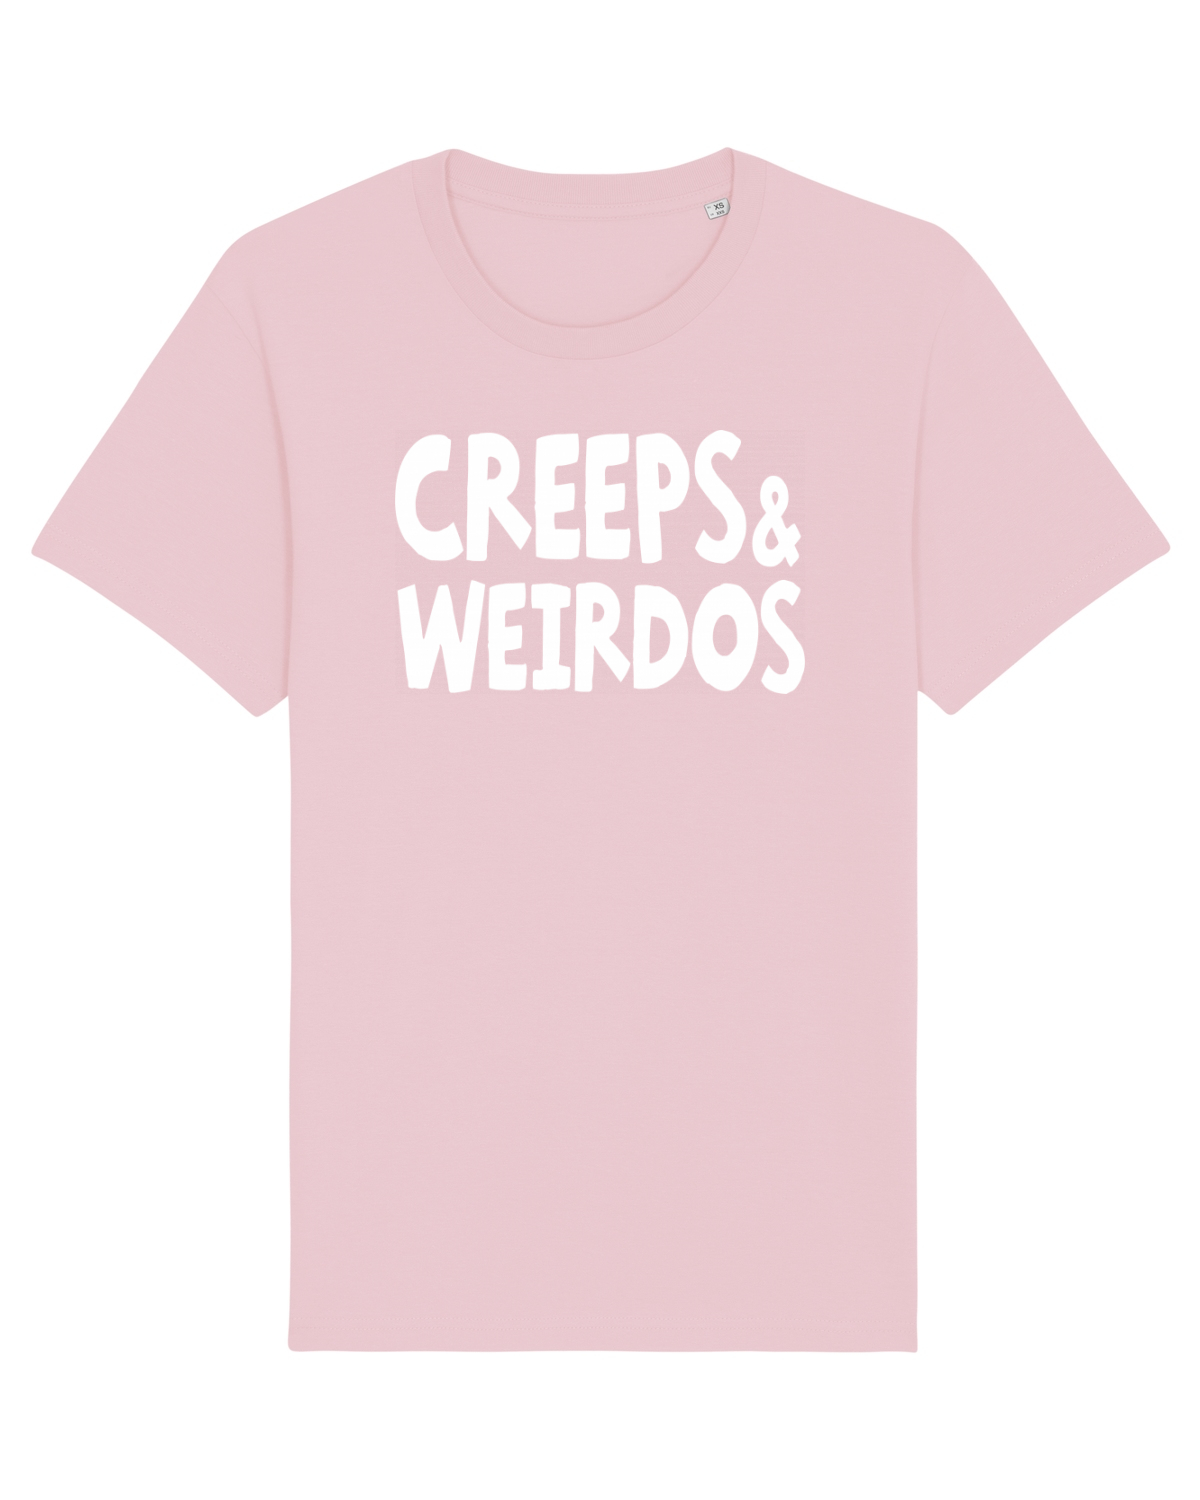 Creeps & Weirdos - white